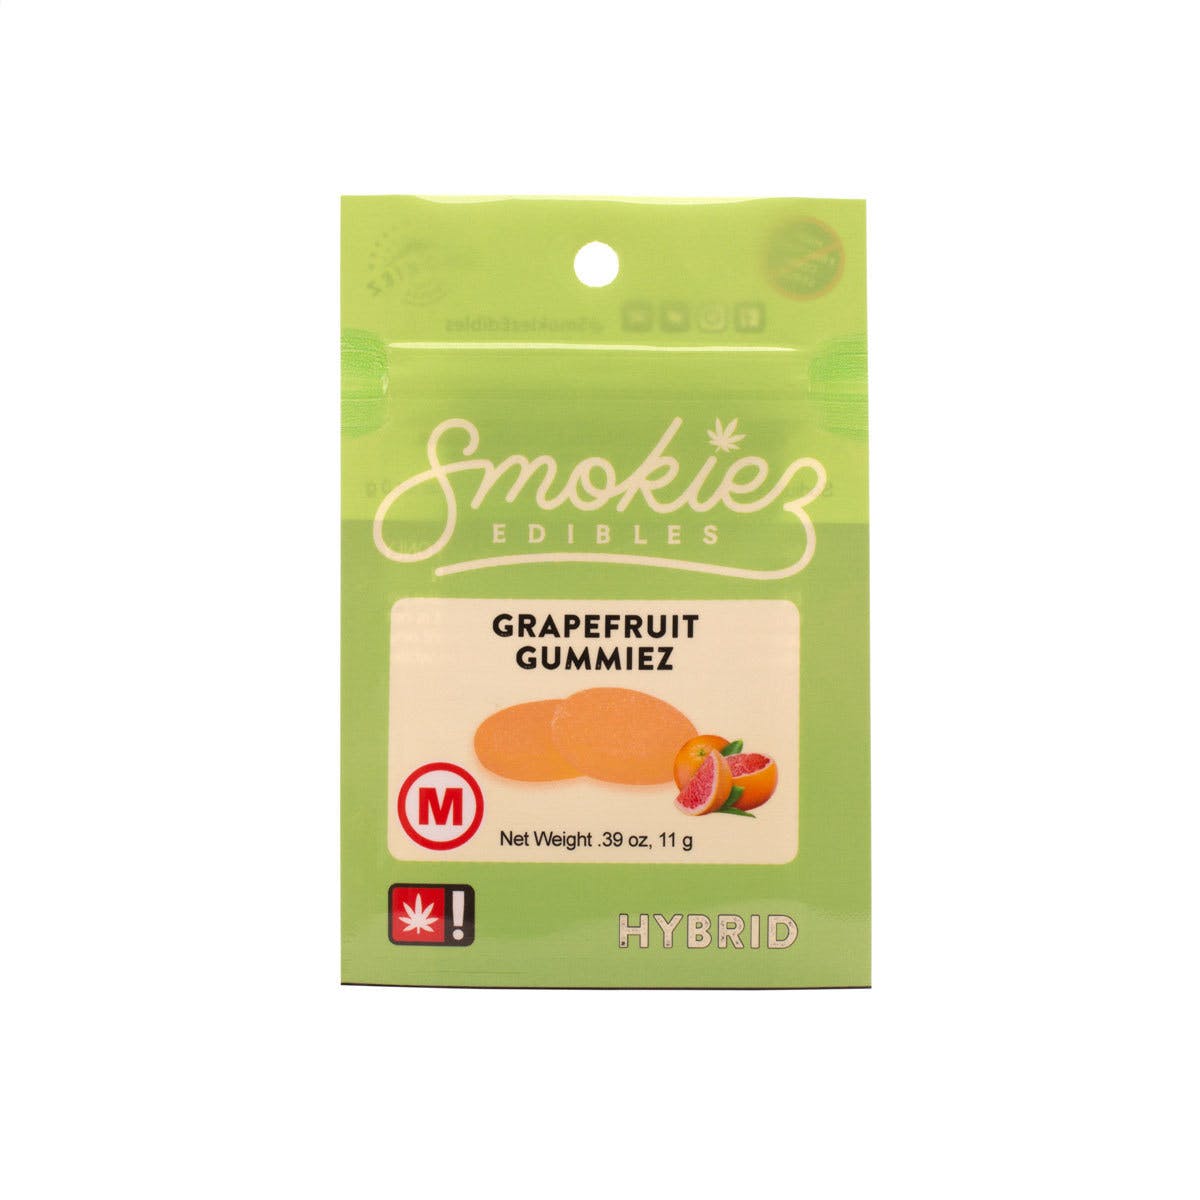 edible-smokiez-edibles-med-hybrid-grapefruit-gummiez-2c-100mg